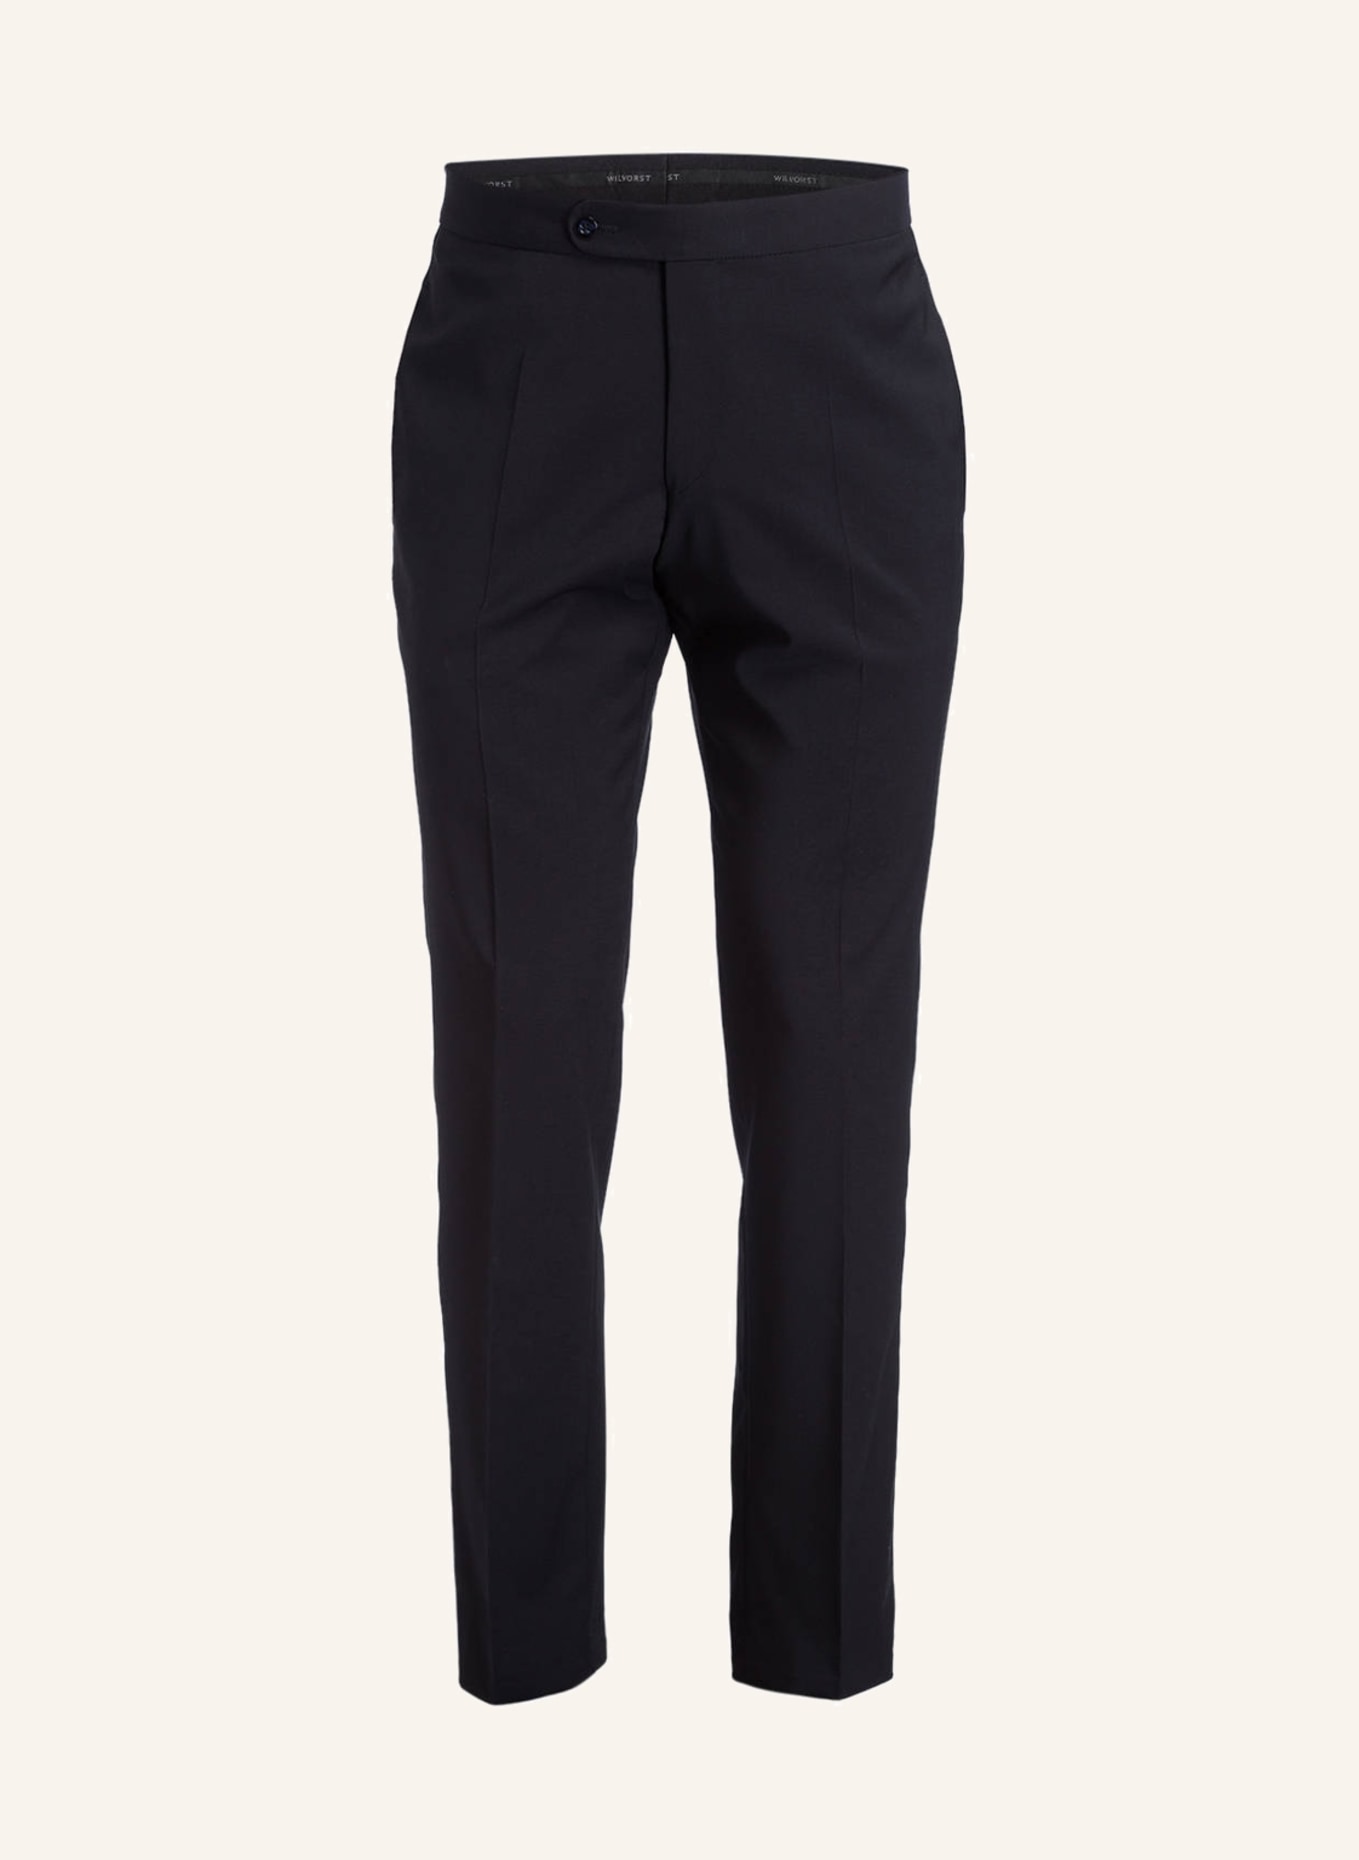 WILVORST Anzughose Slim Fit, Farbe: 030 BLAU (Bild 1)